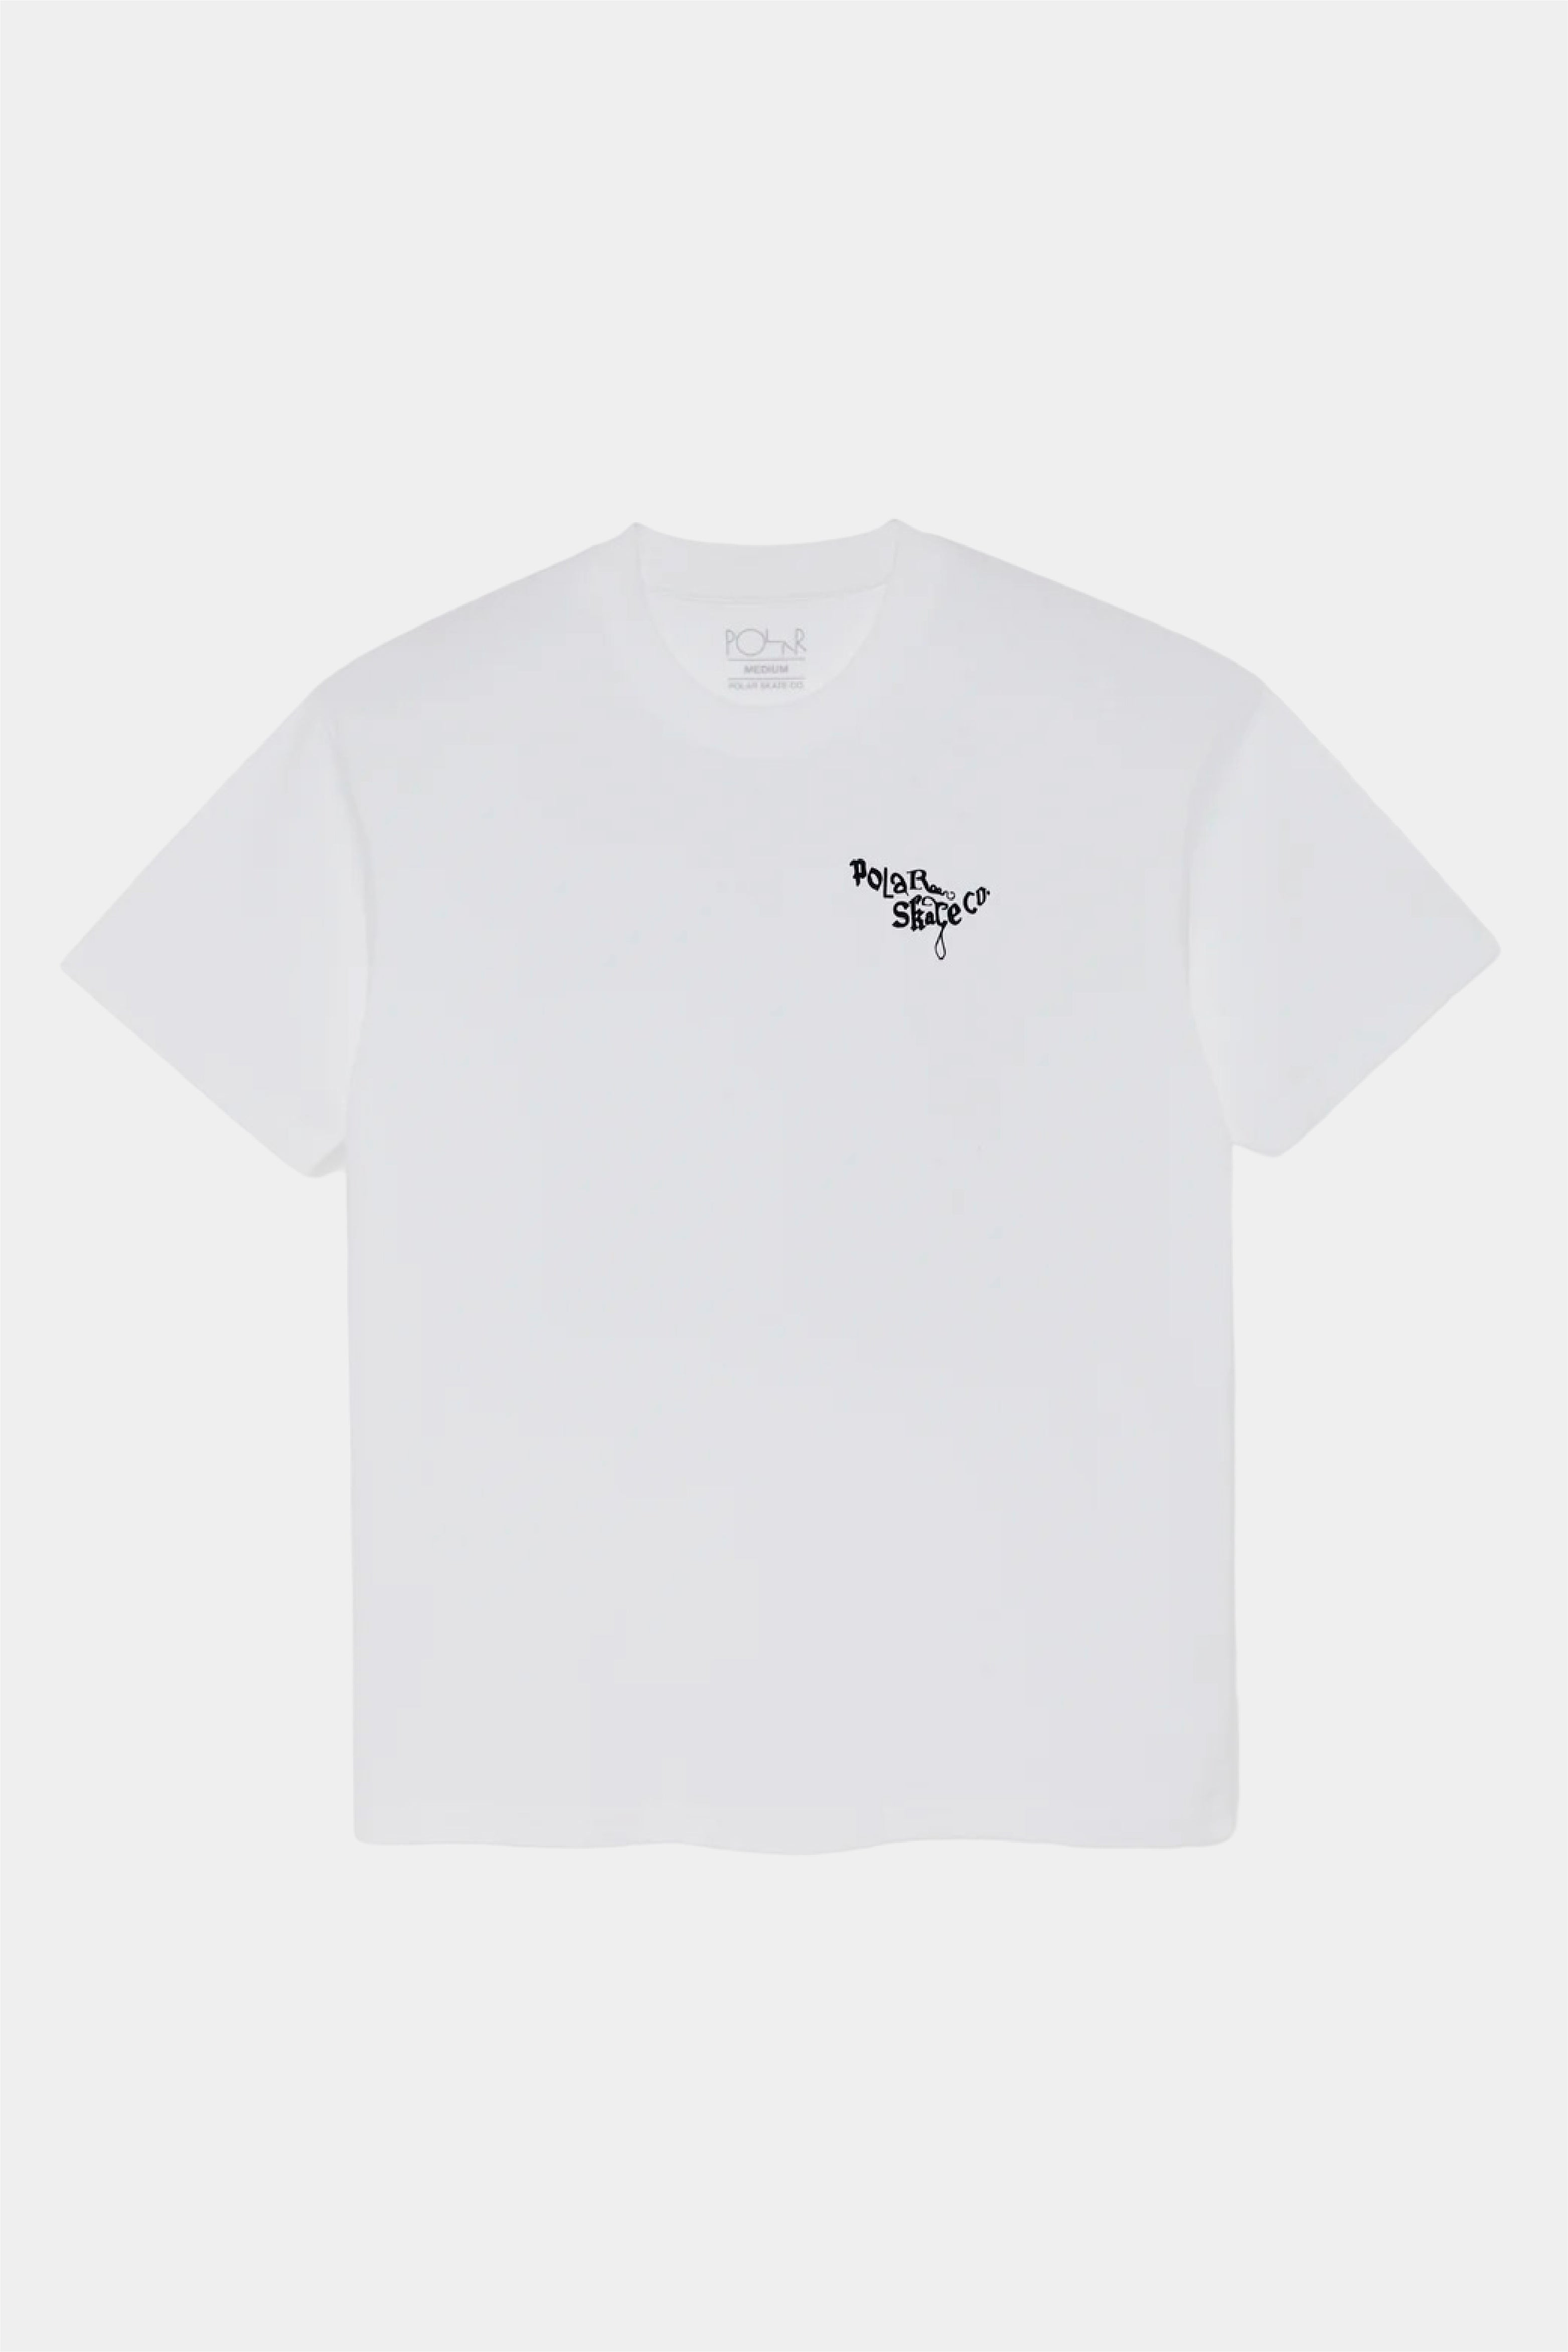 Selectshop FRAME - POLAR SKATE CO. Gorilla King Tee T-Shirts Concept Store Dubai